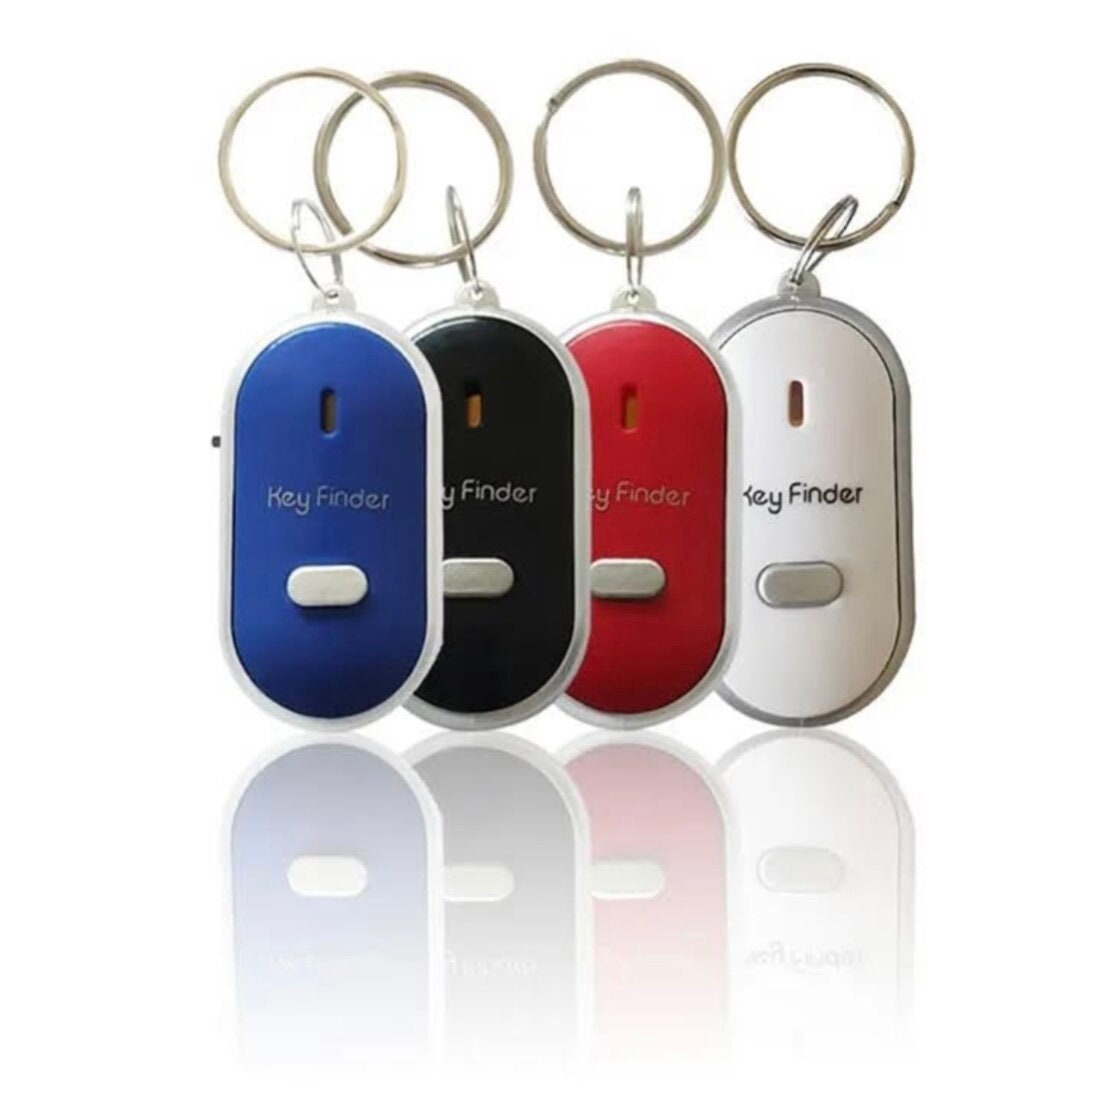 Wholesale Key Finder for Purses, Gotcha Keys for your store - Faire